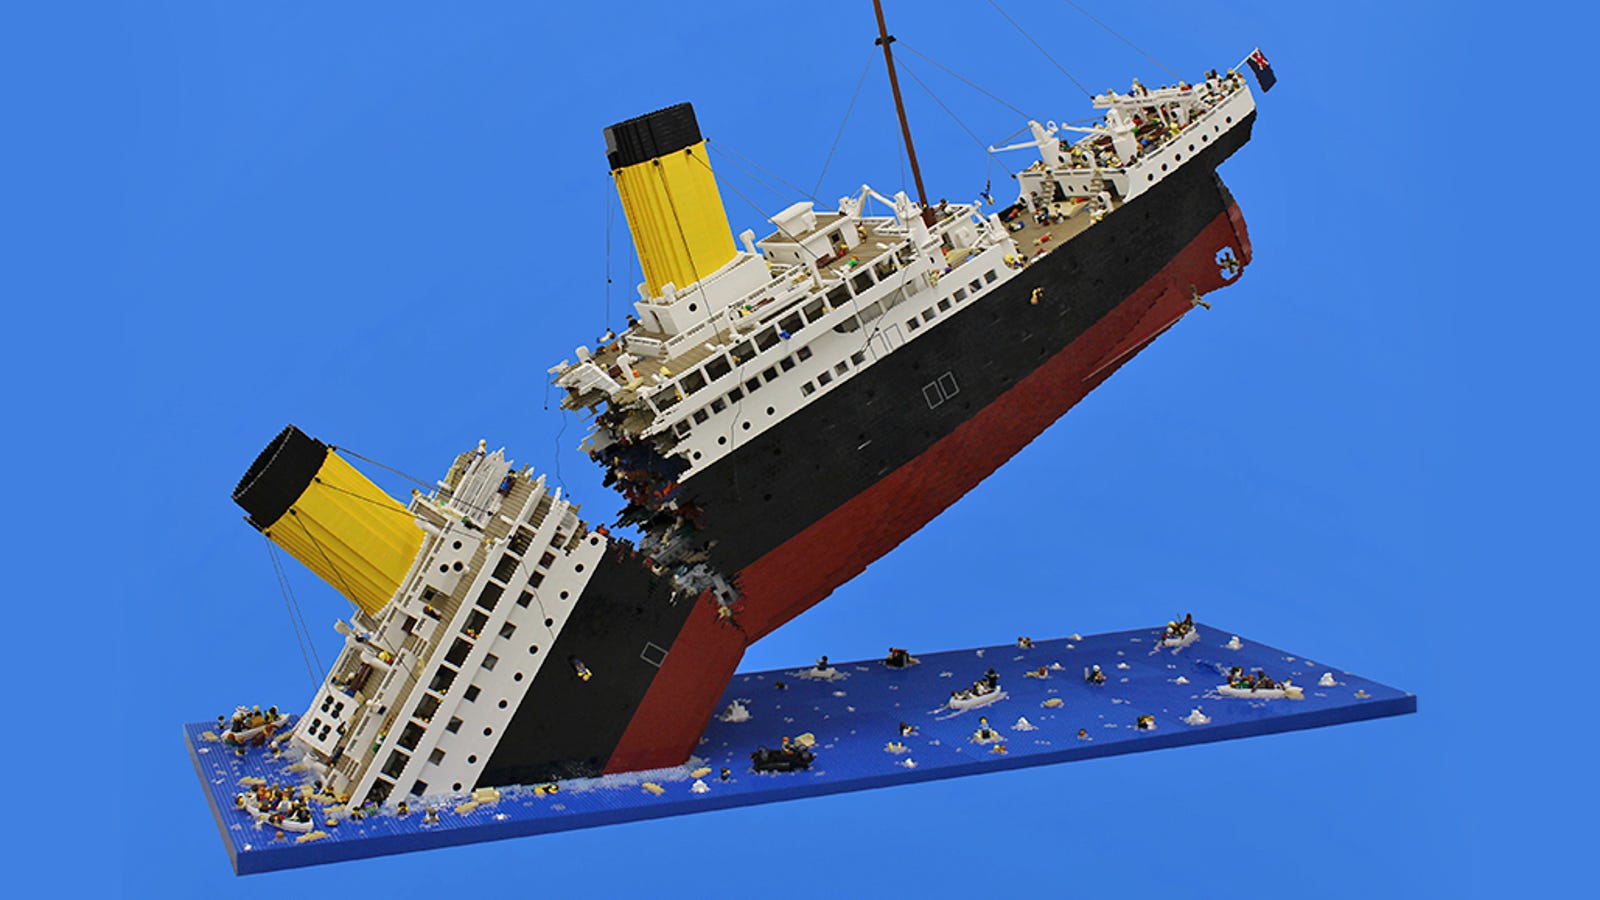 120000 Piece Lego Model Of The Titanic Breaking In Half Is